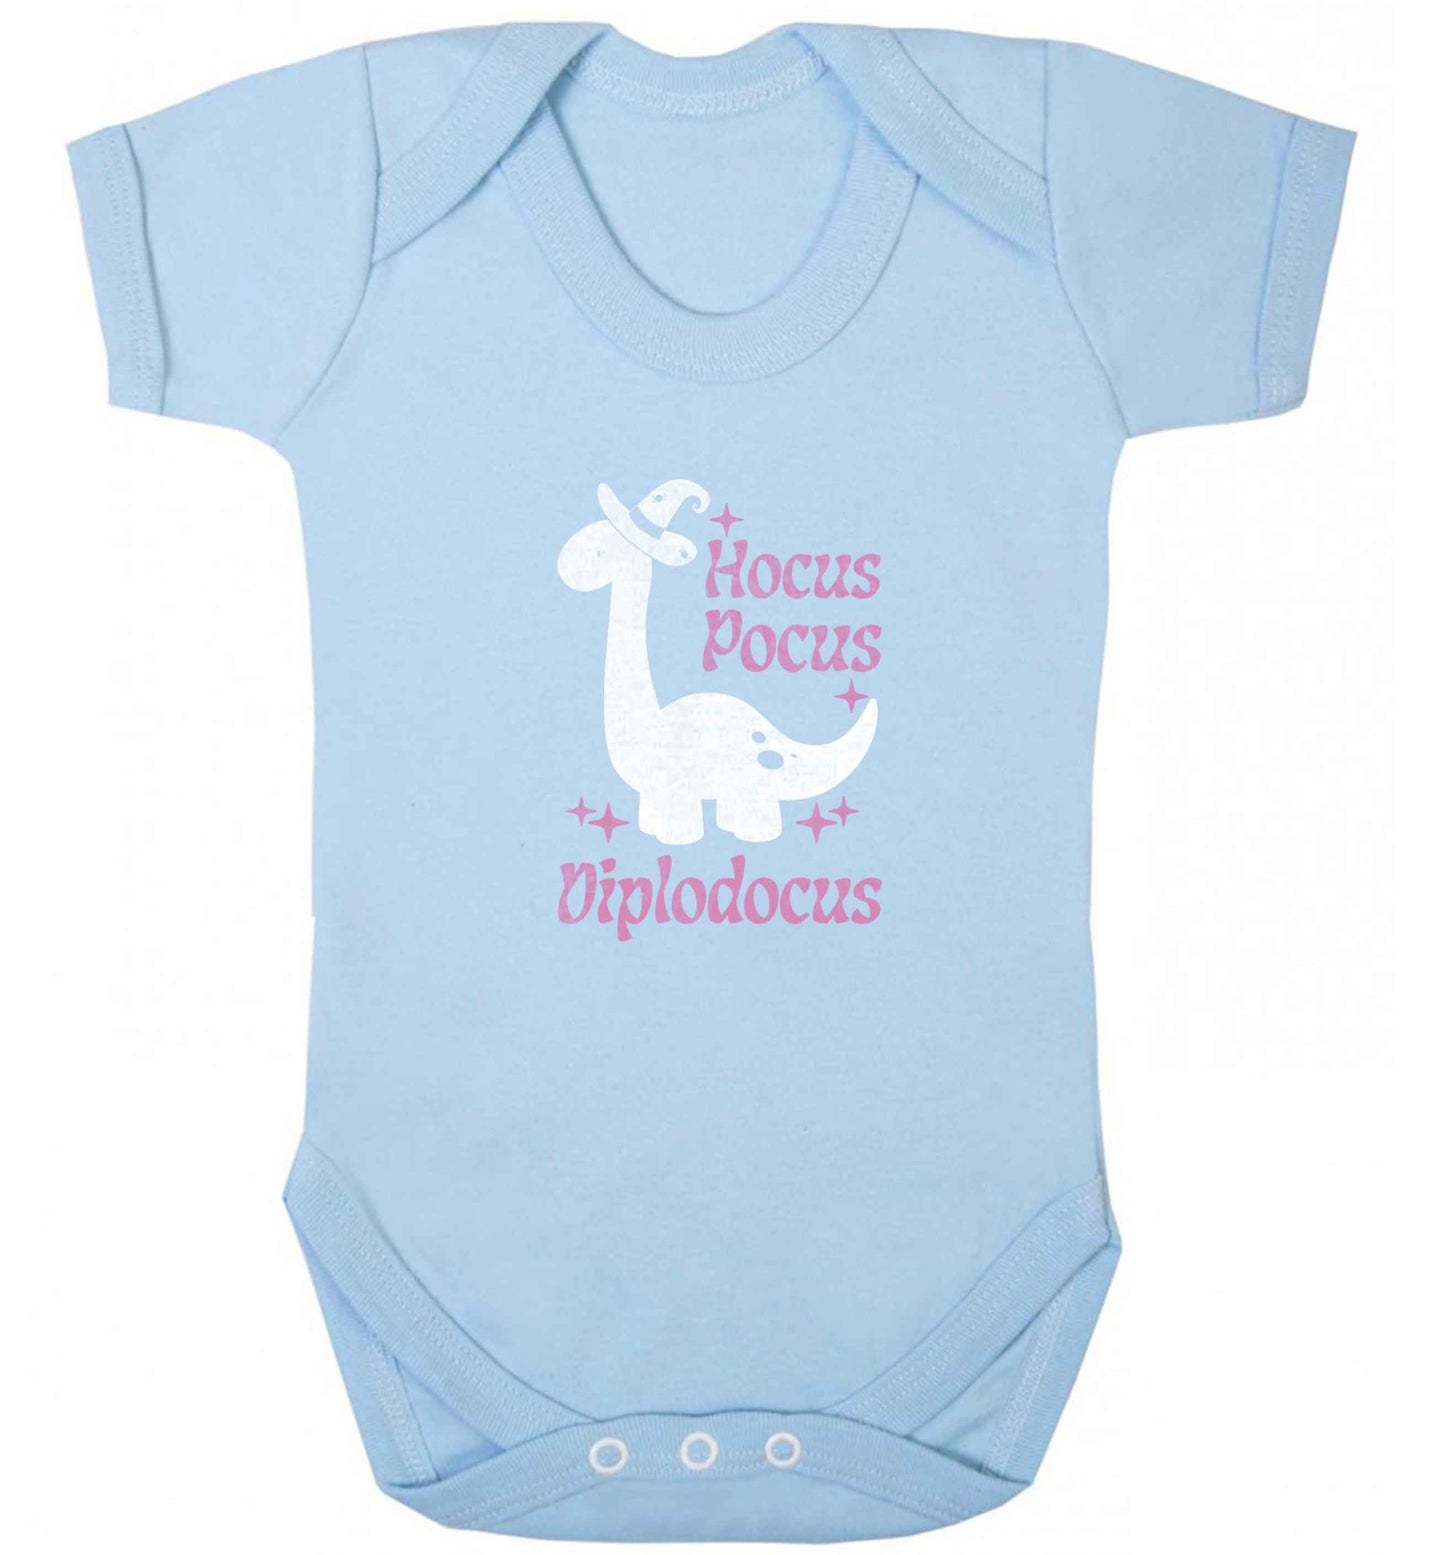 Hocus pocus diplodocus Kit baby vest pale blue 18-24 months